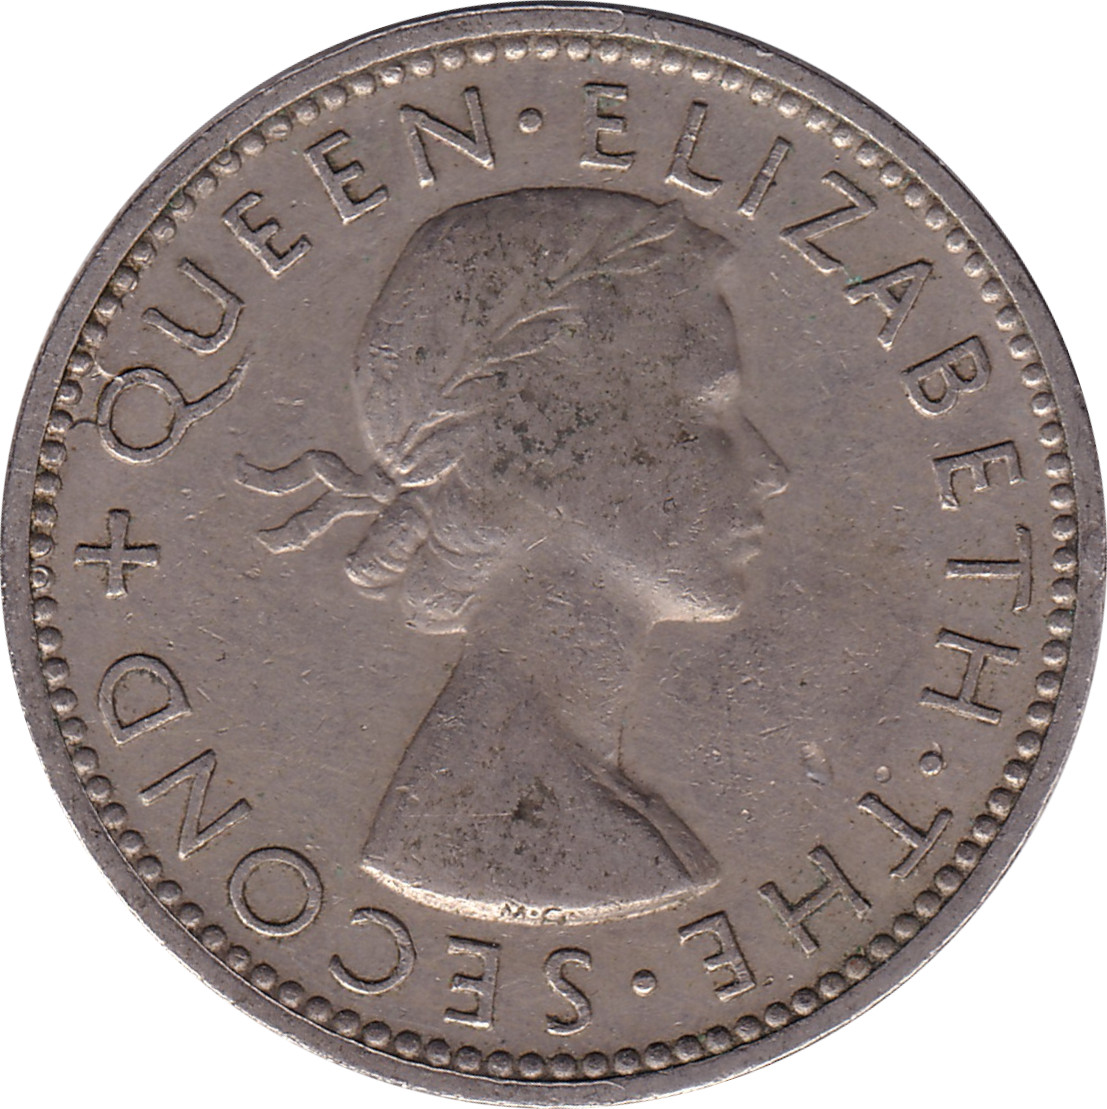 1 shilling - Elizabeth II